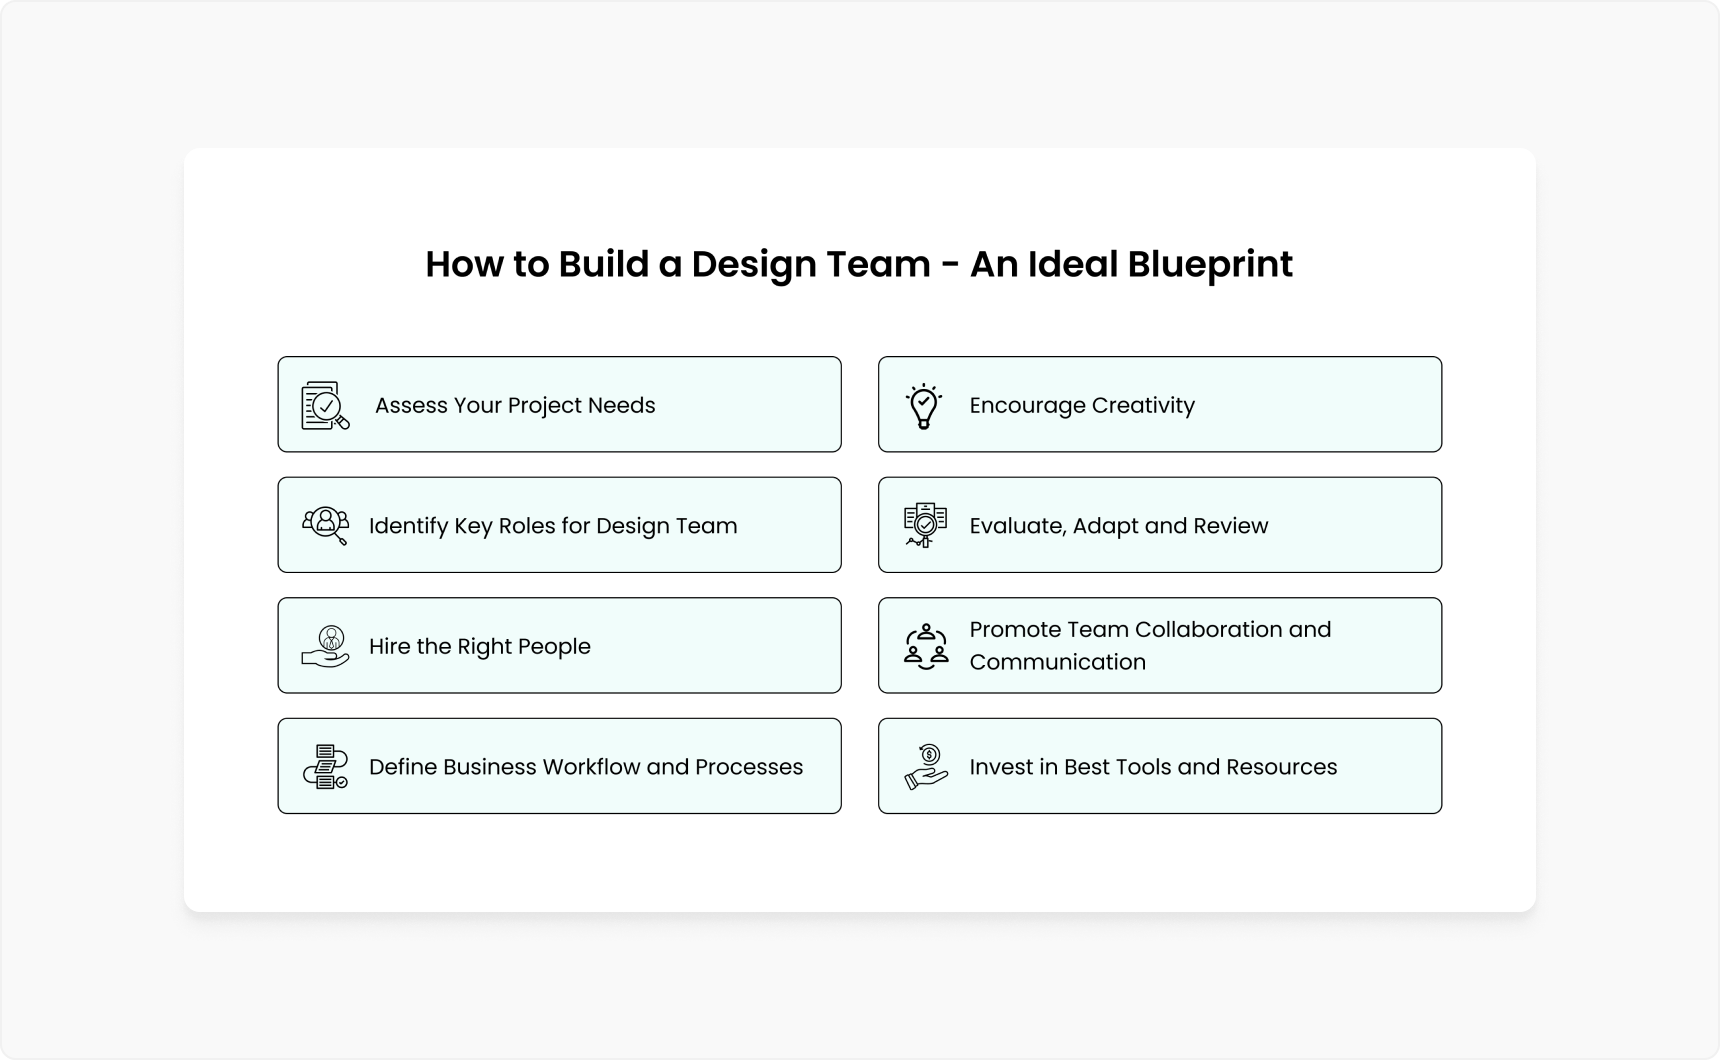 How to Build a Design Team - An Ideal Blueprint